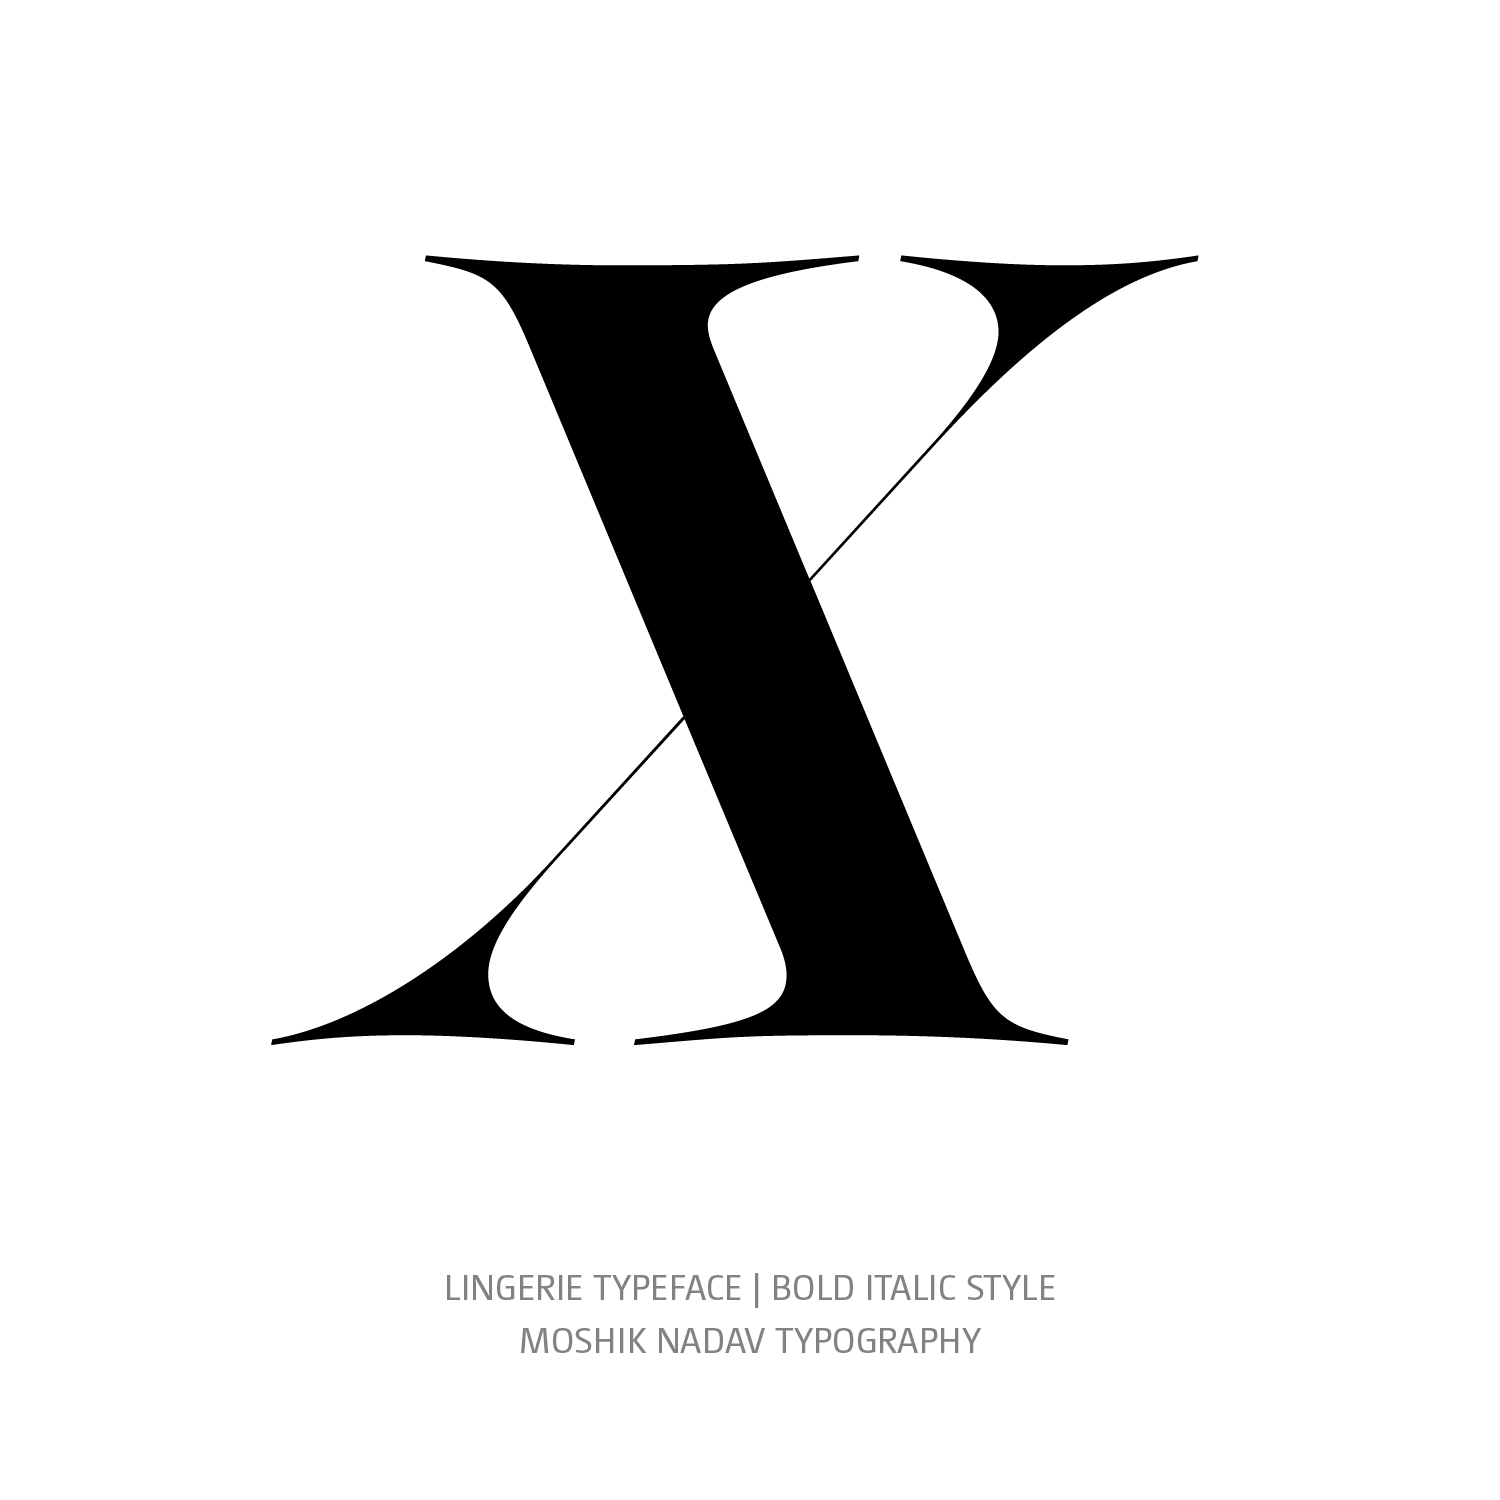 Lingerie Typeface Bold Italic X